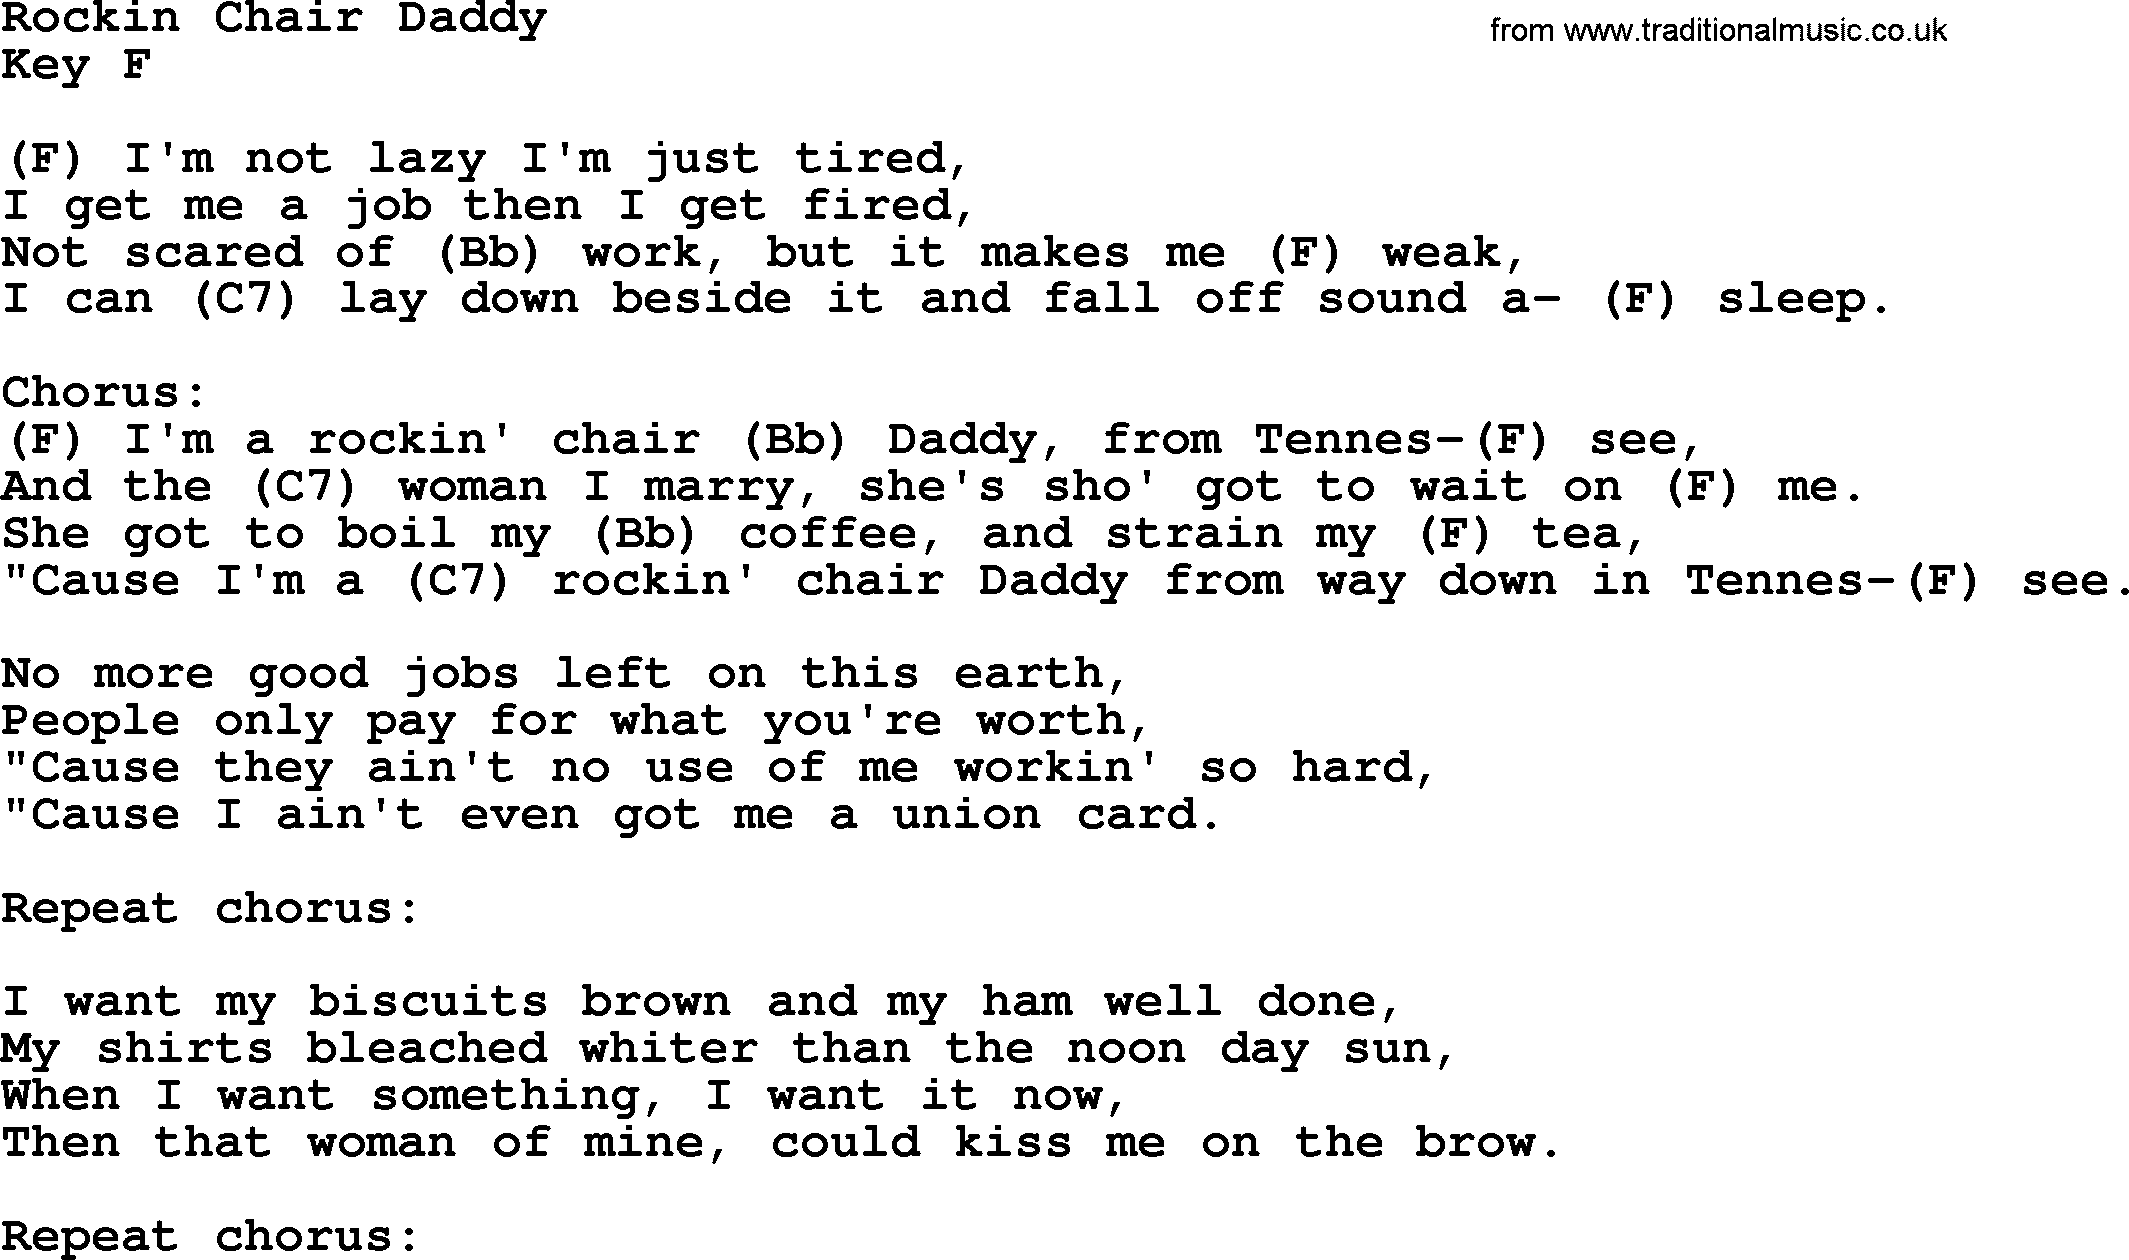 Hank Williams song Rockin Chair Daddy, lyrics and chords